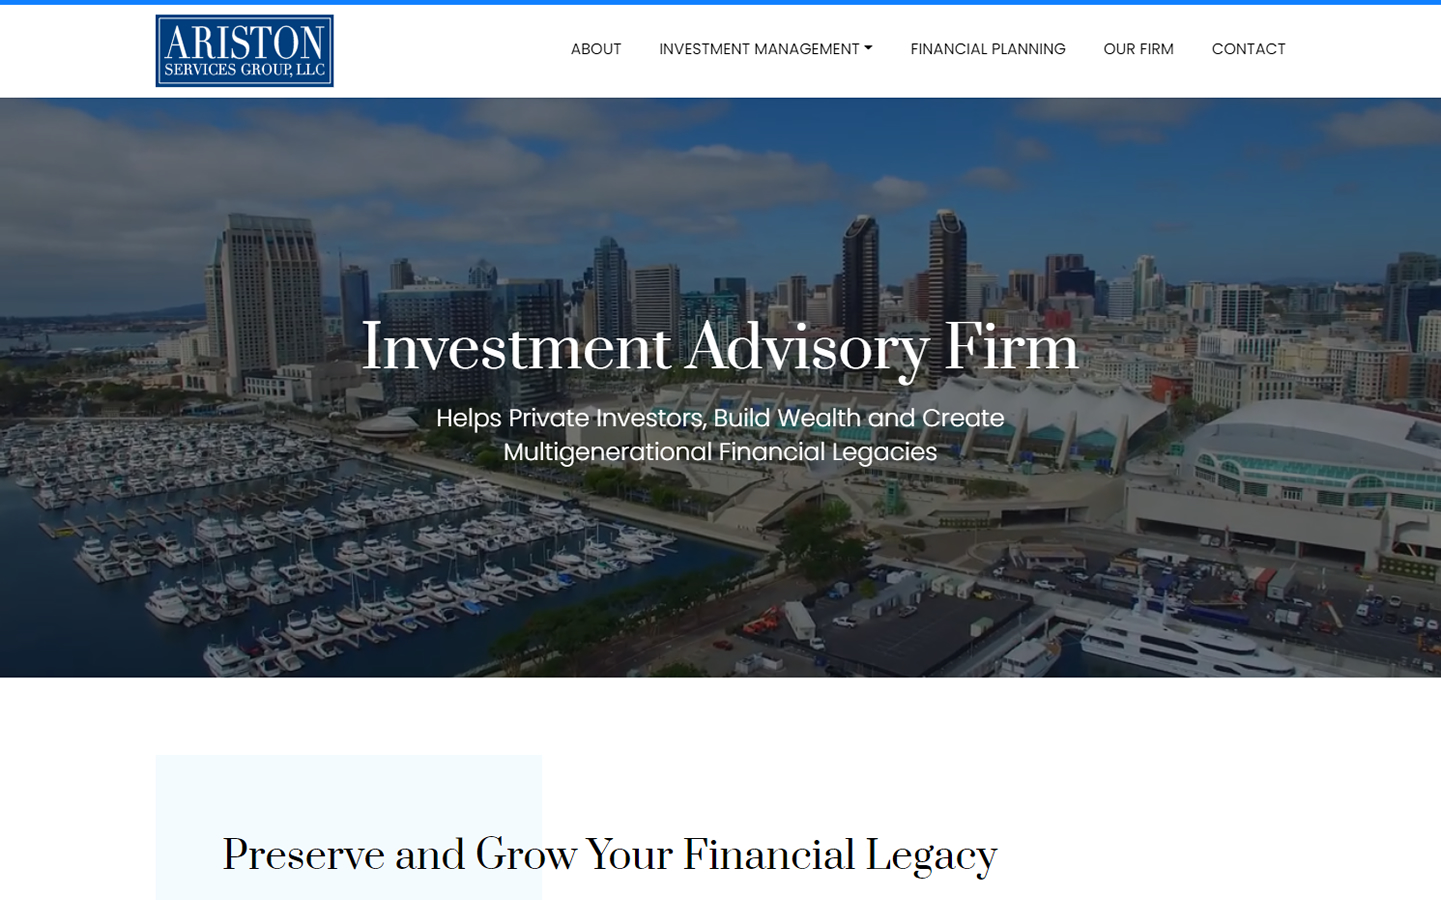 financial advisor websites